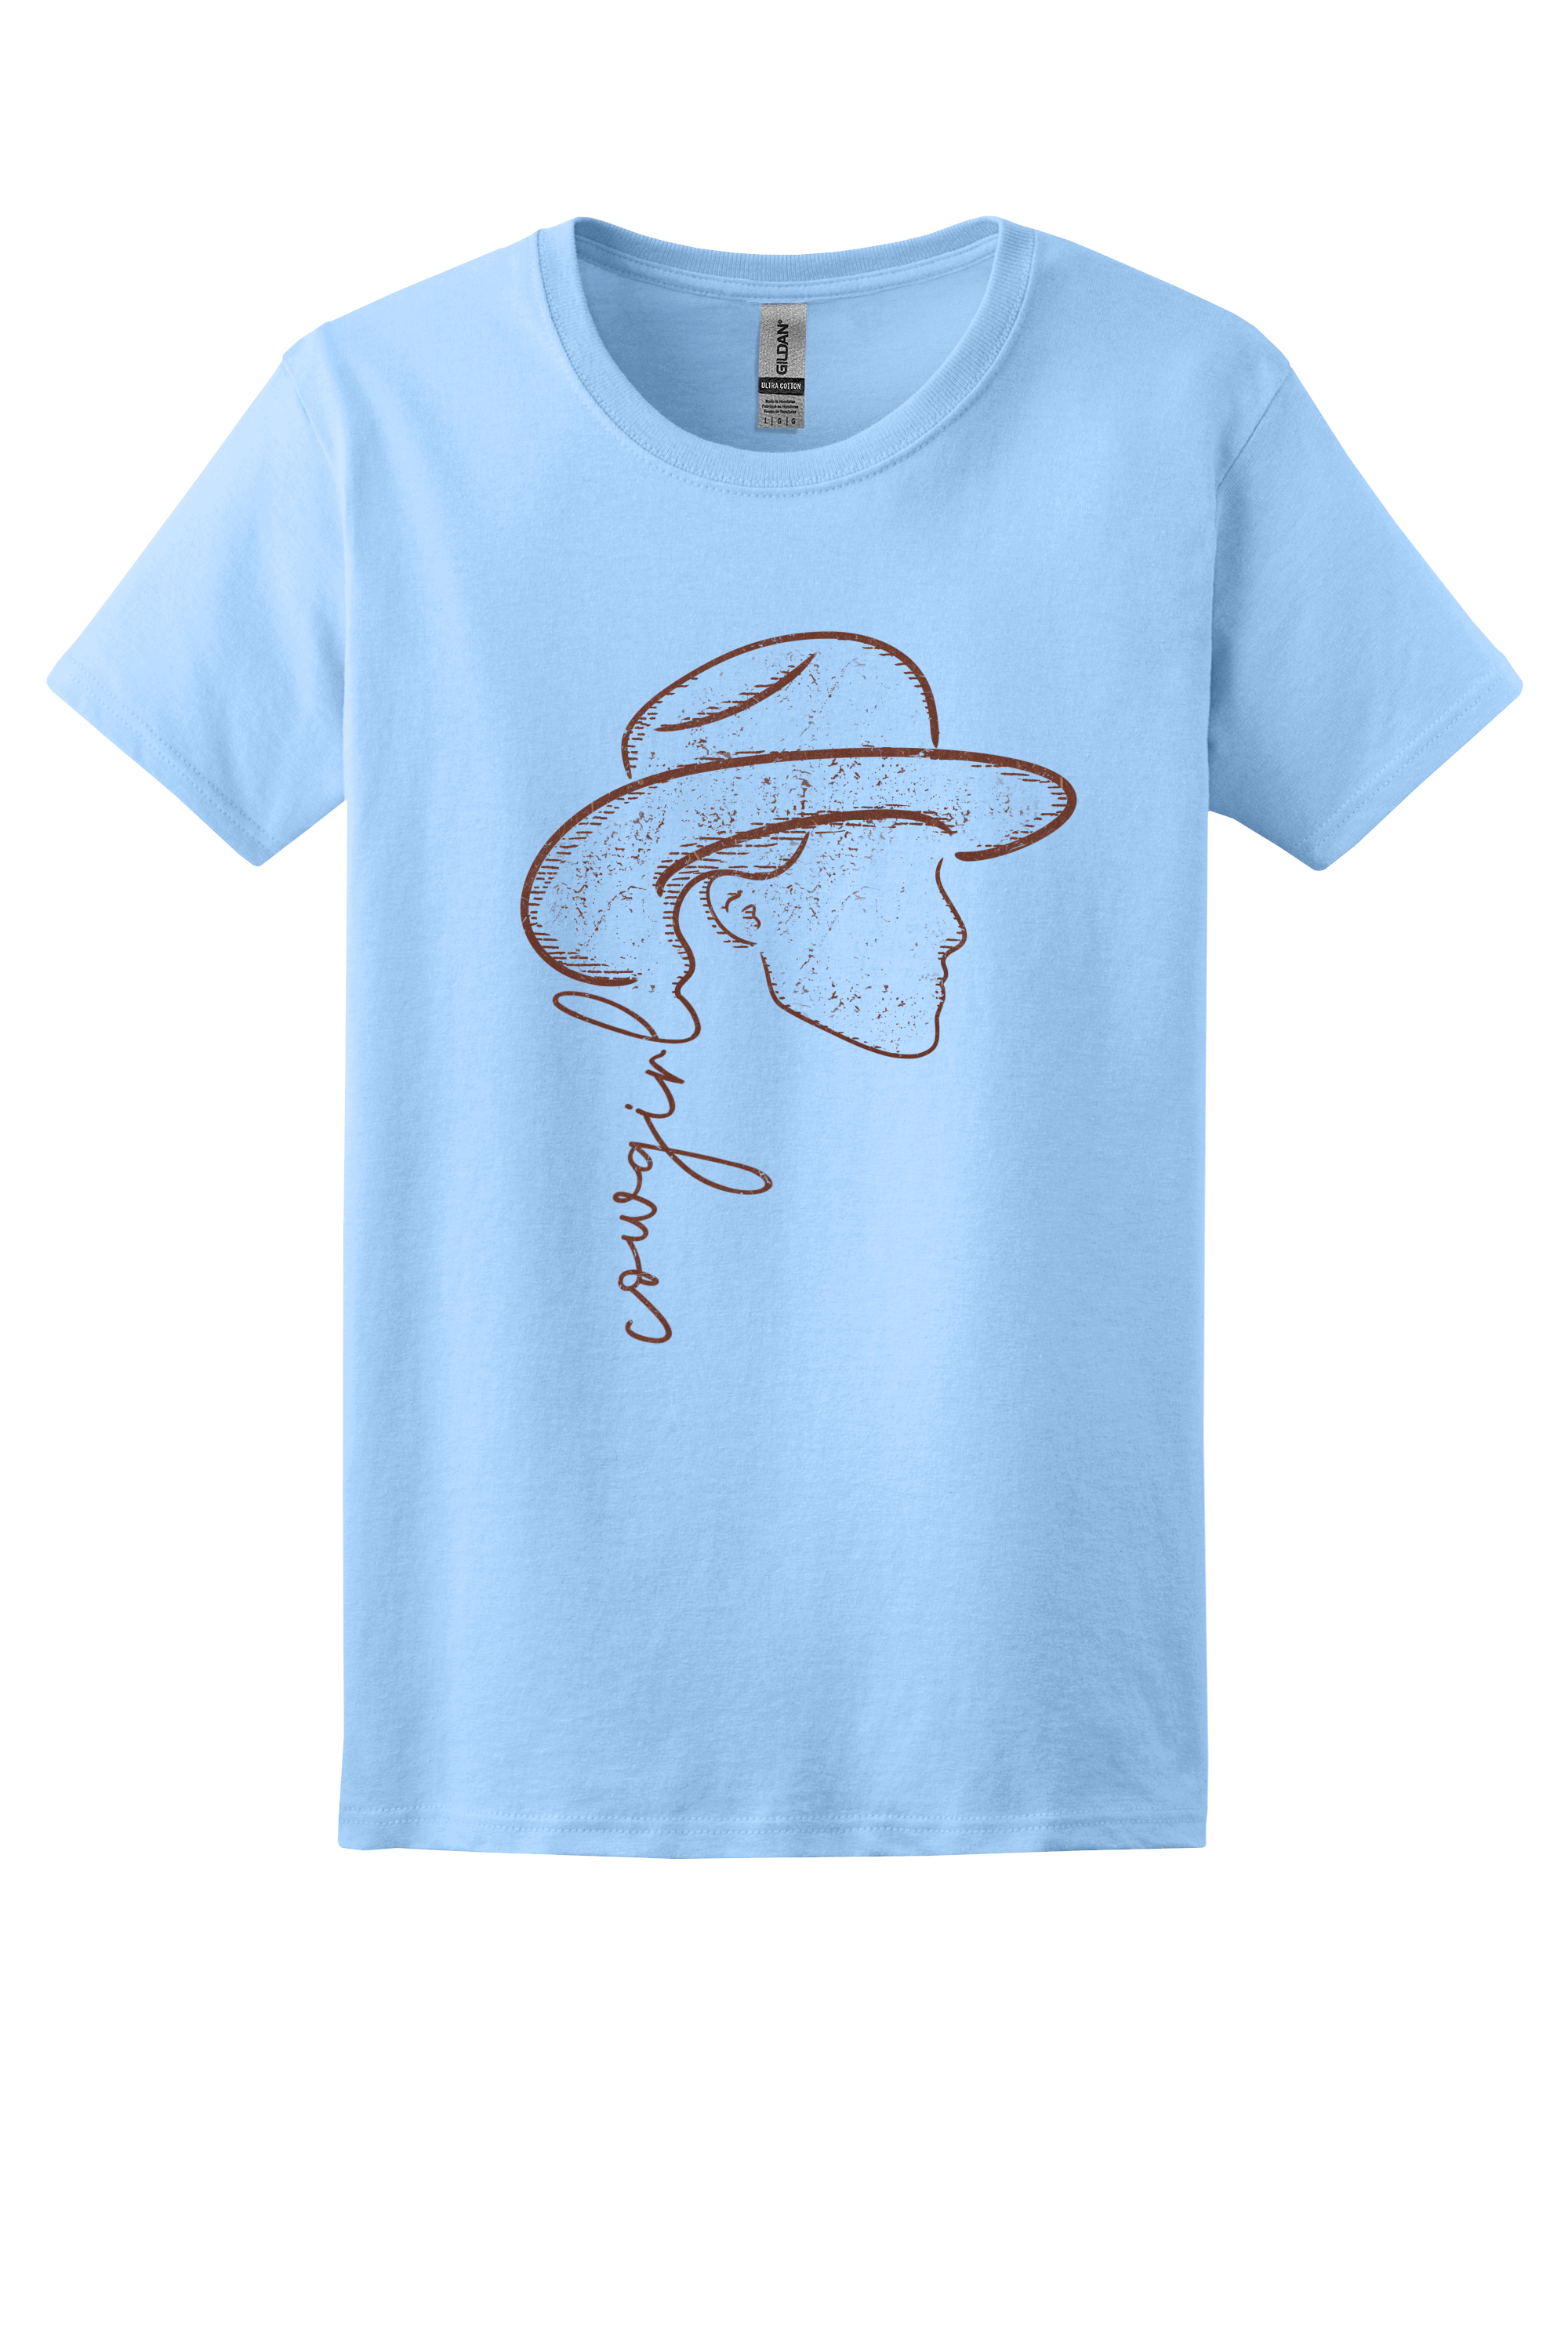 Cowgirls Shirt